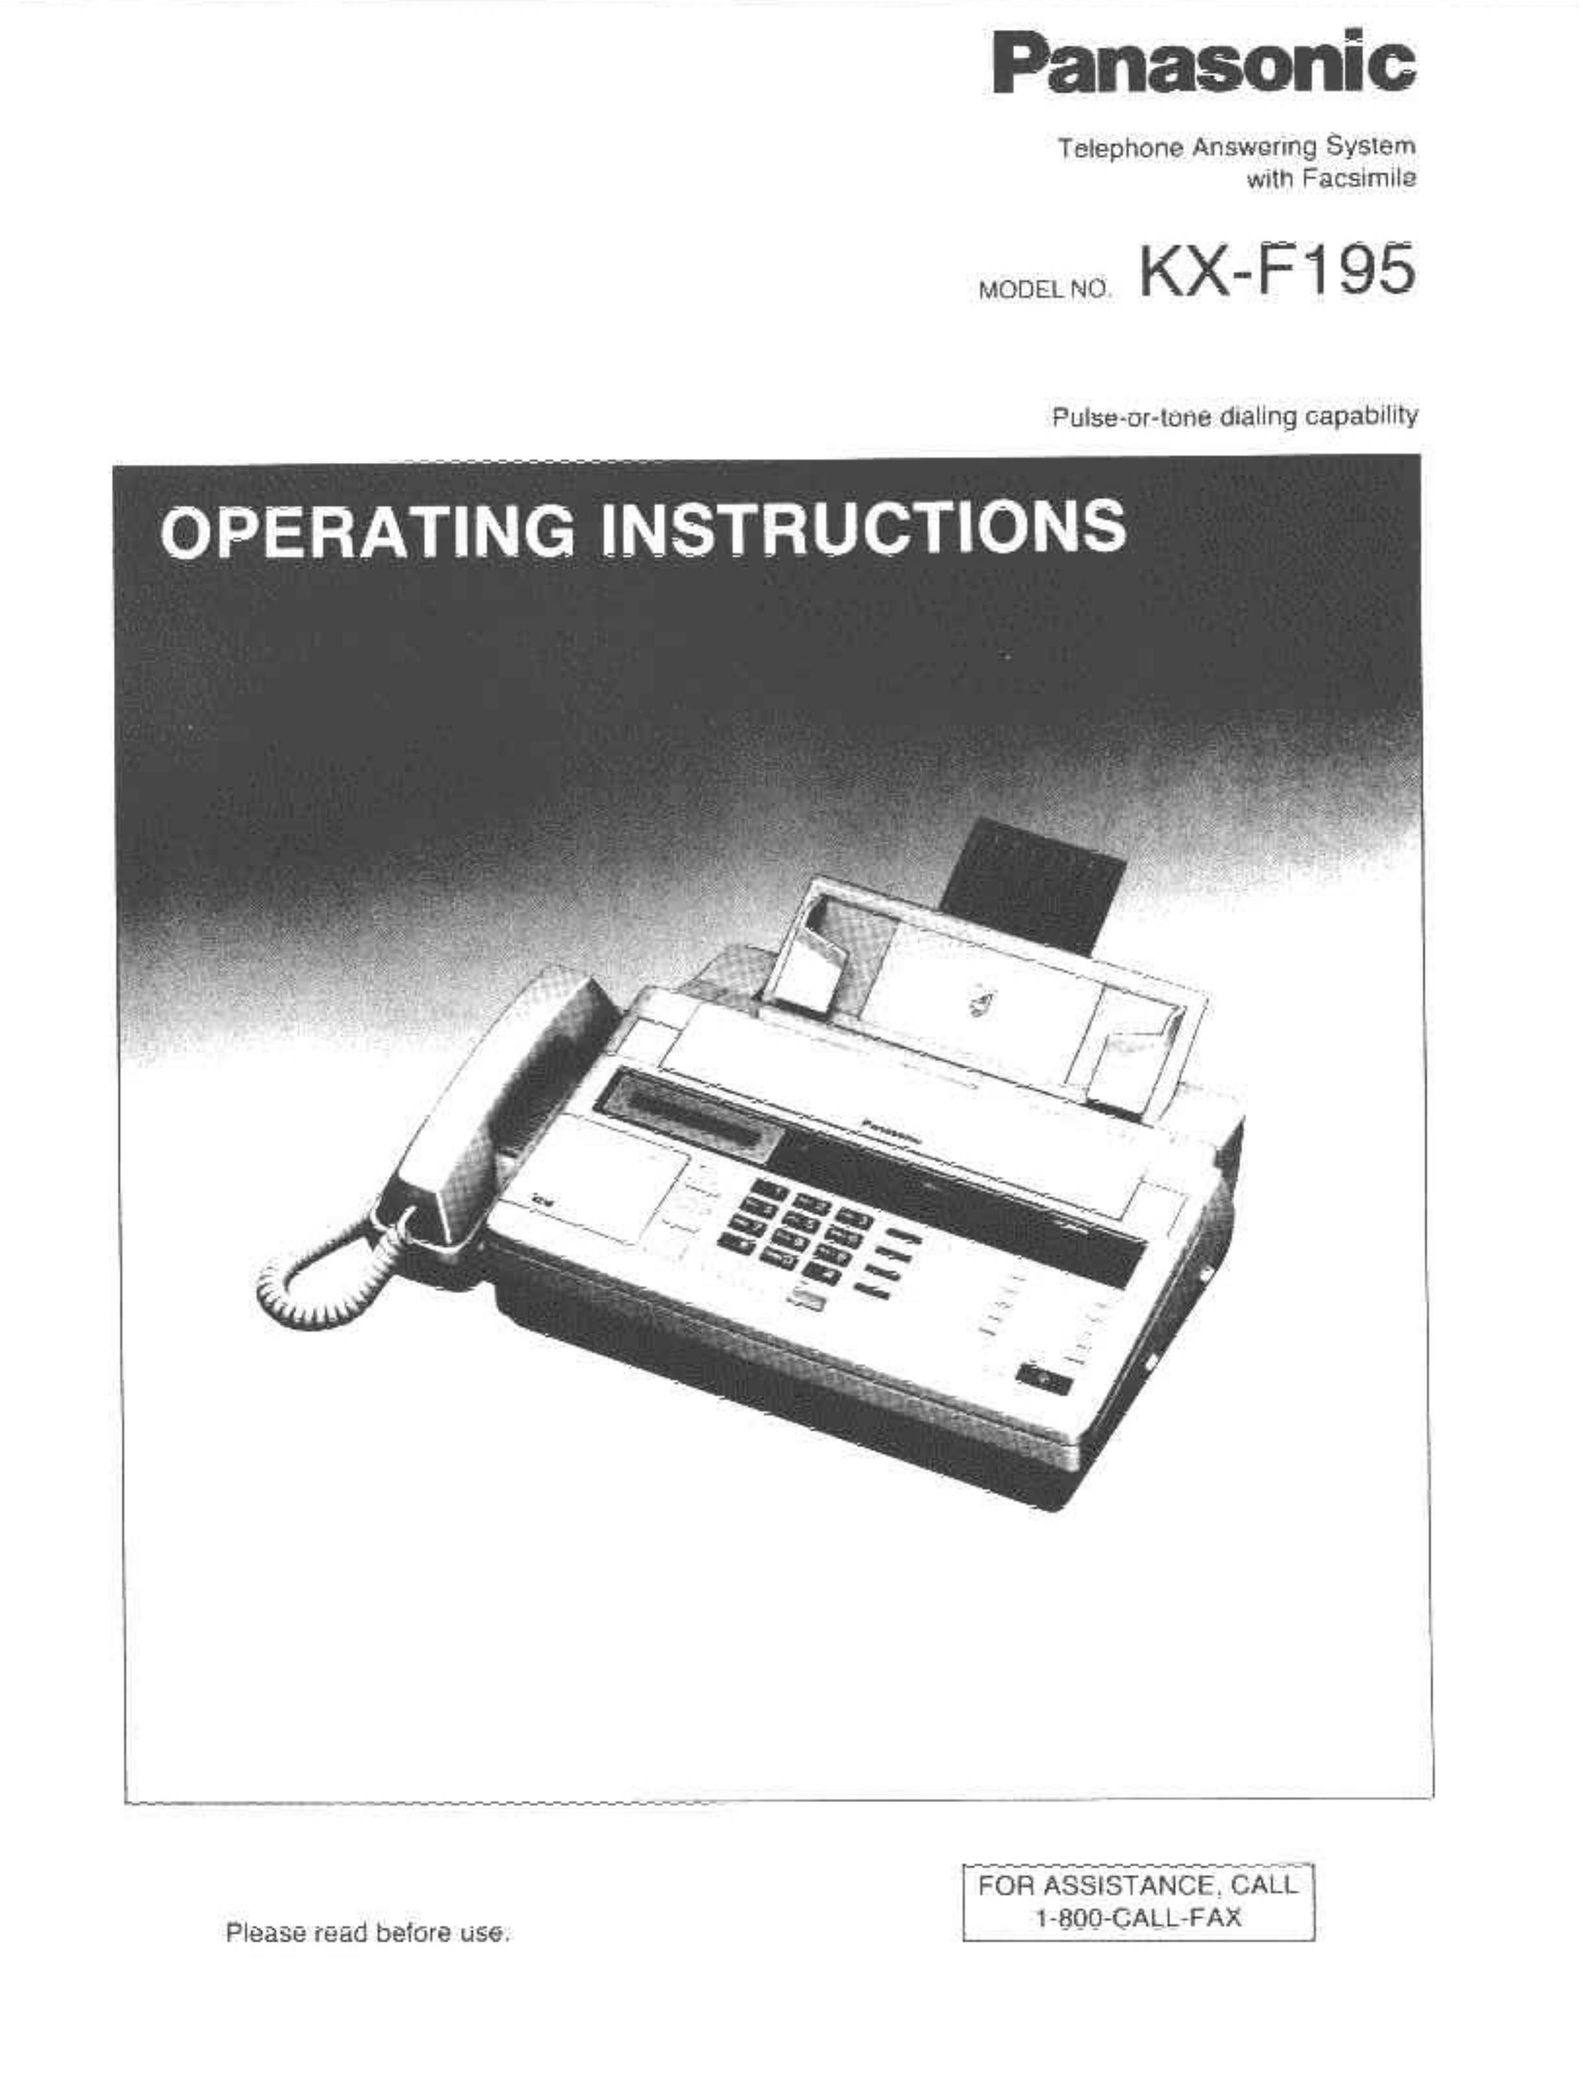 Panasonic KX-F195 Answering Machine User Manual